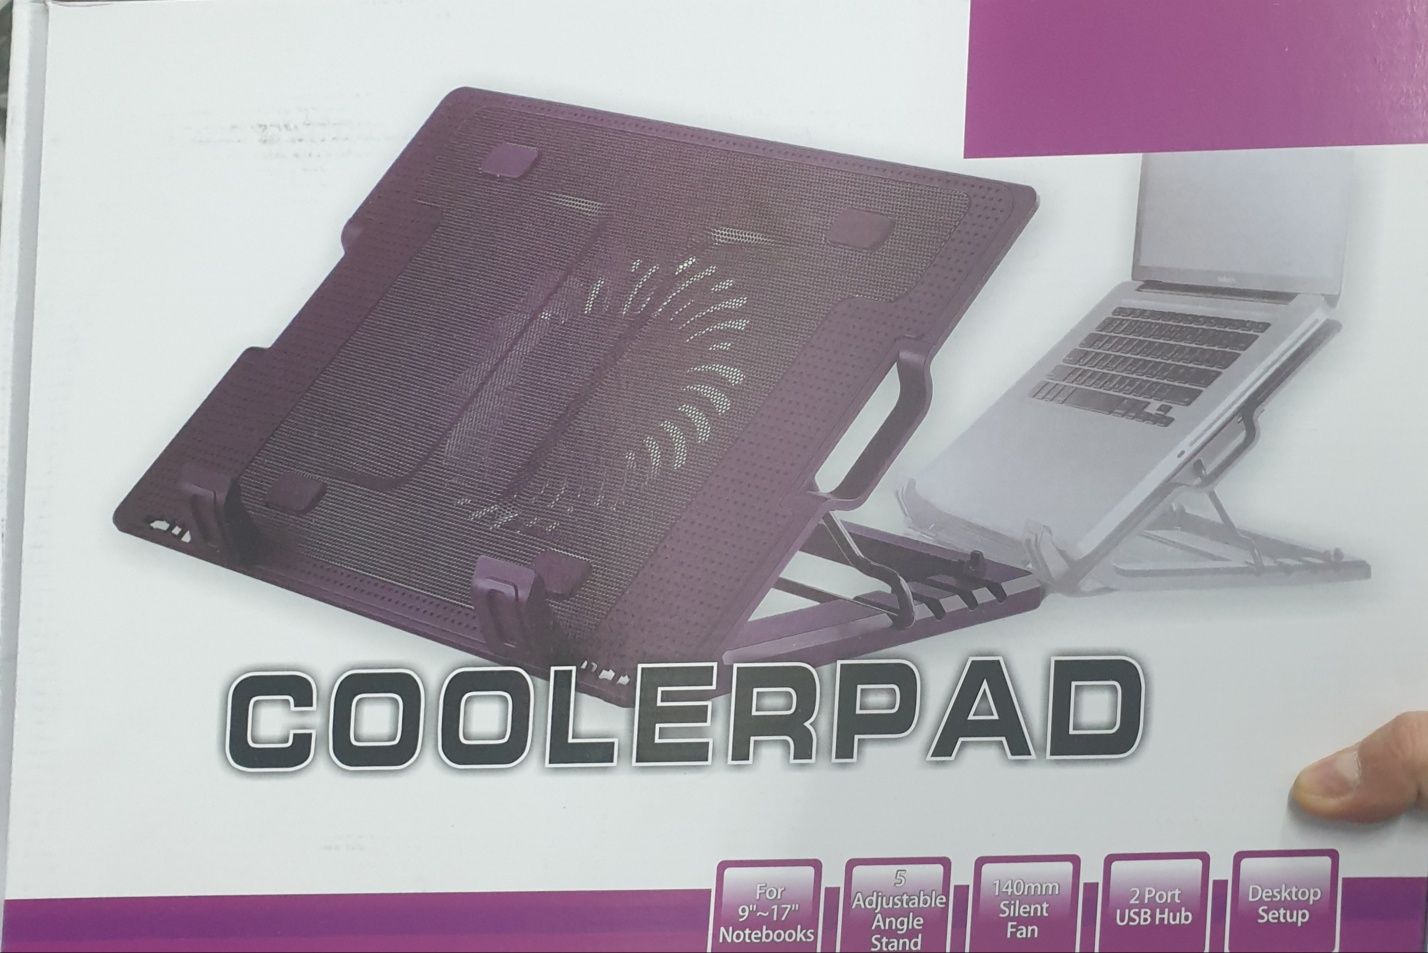 Base refrigeradora cooling notebook 9"-17"